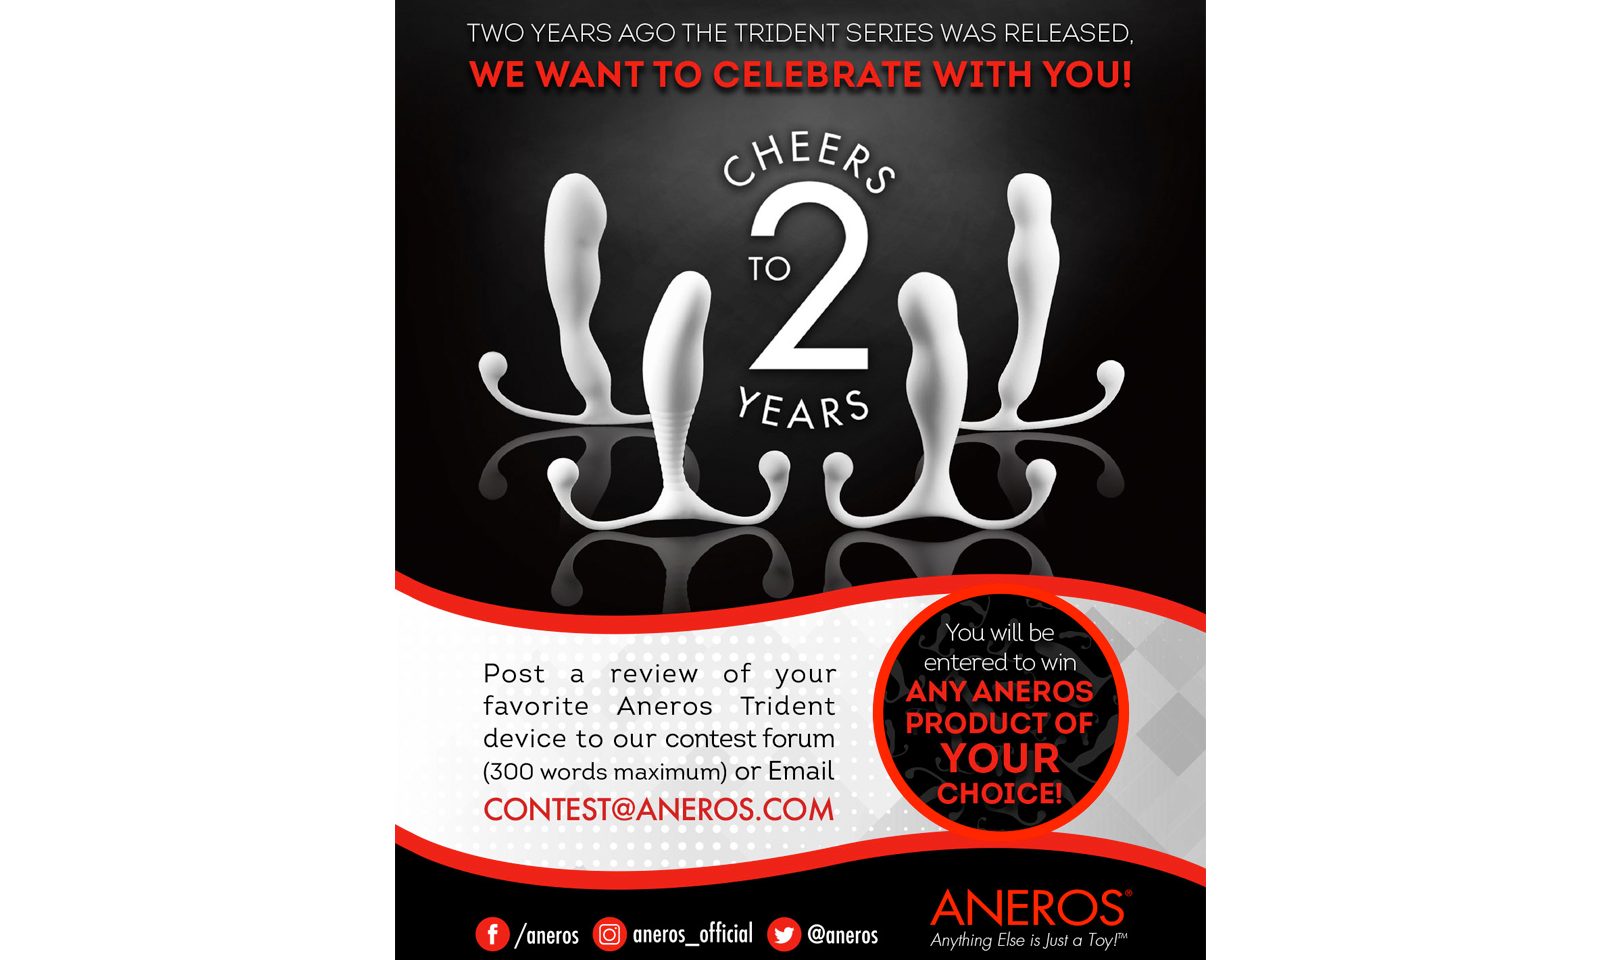 Aneros Celebrates Trident Series’ Anniversary with Contest